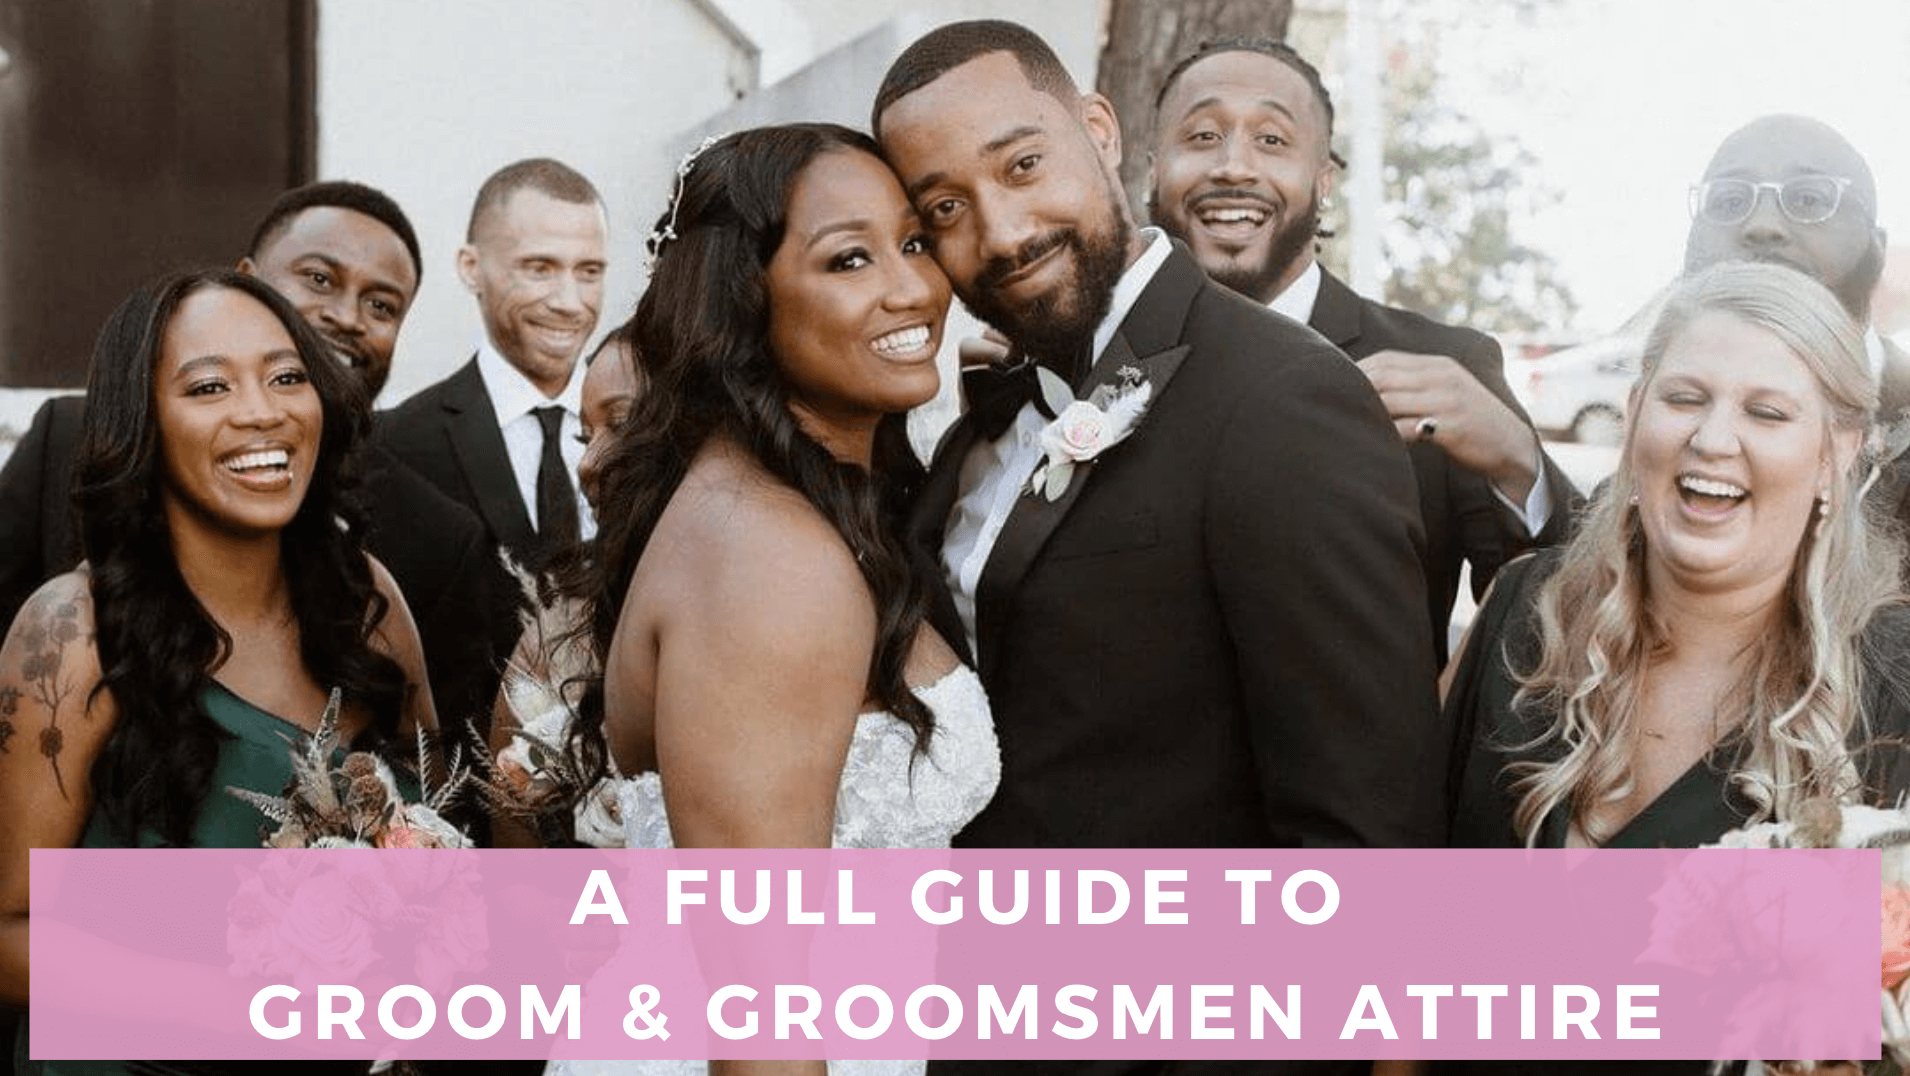 Your Full Guide to Groom & Groomsmen Attire